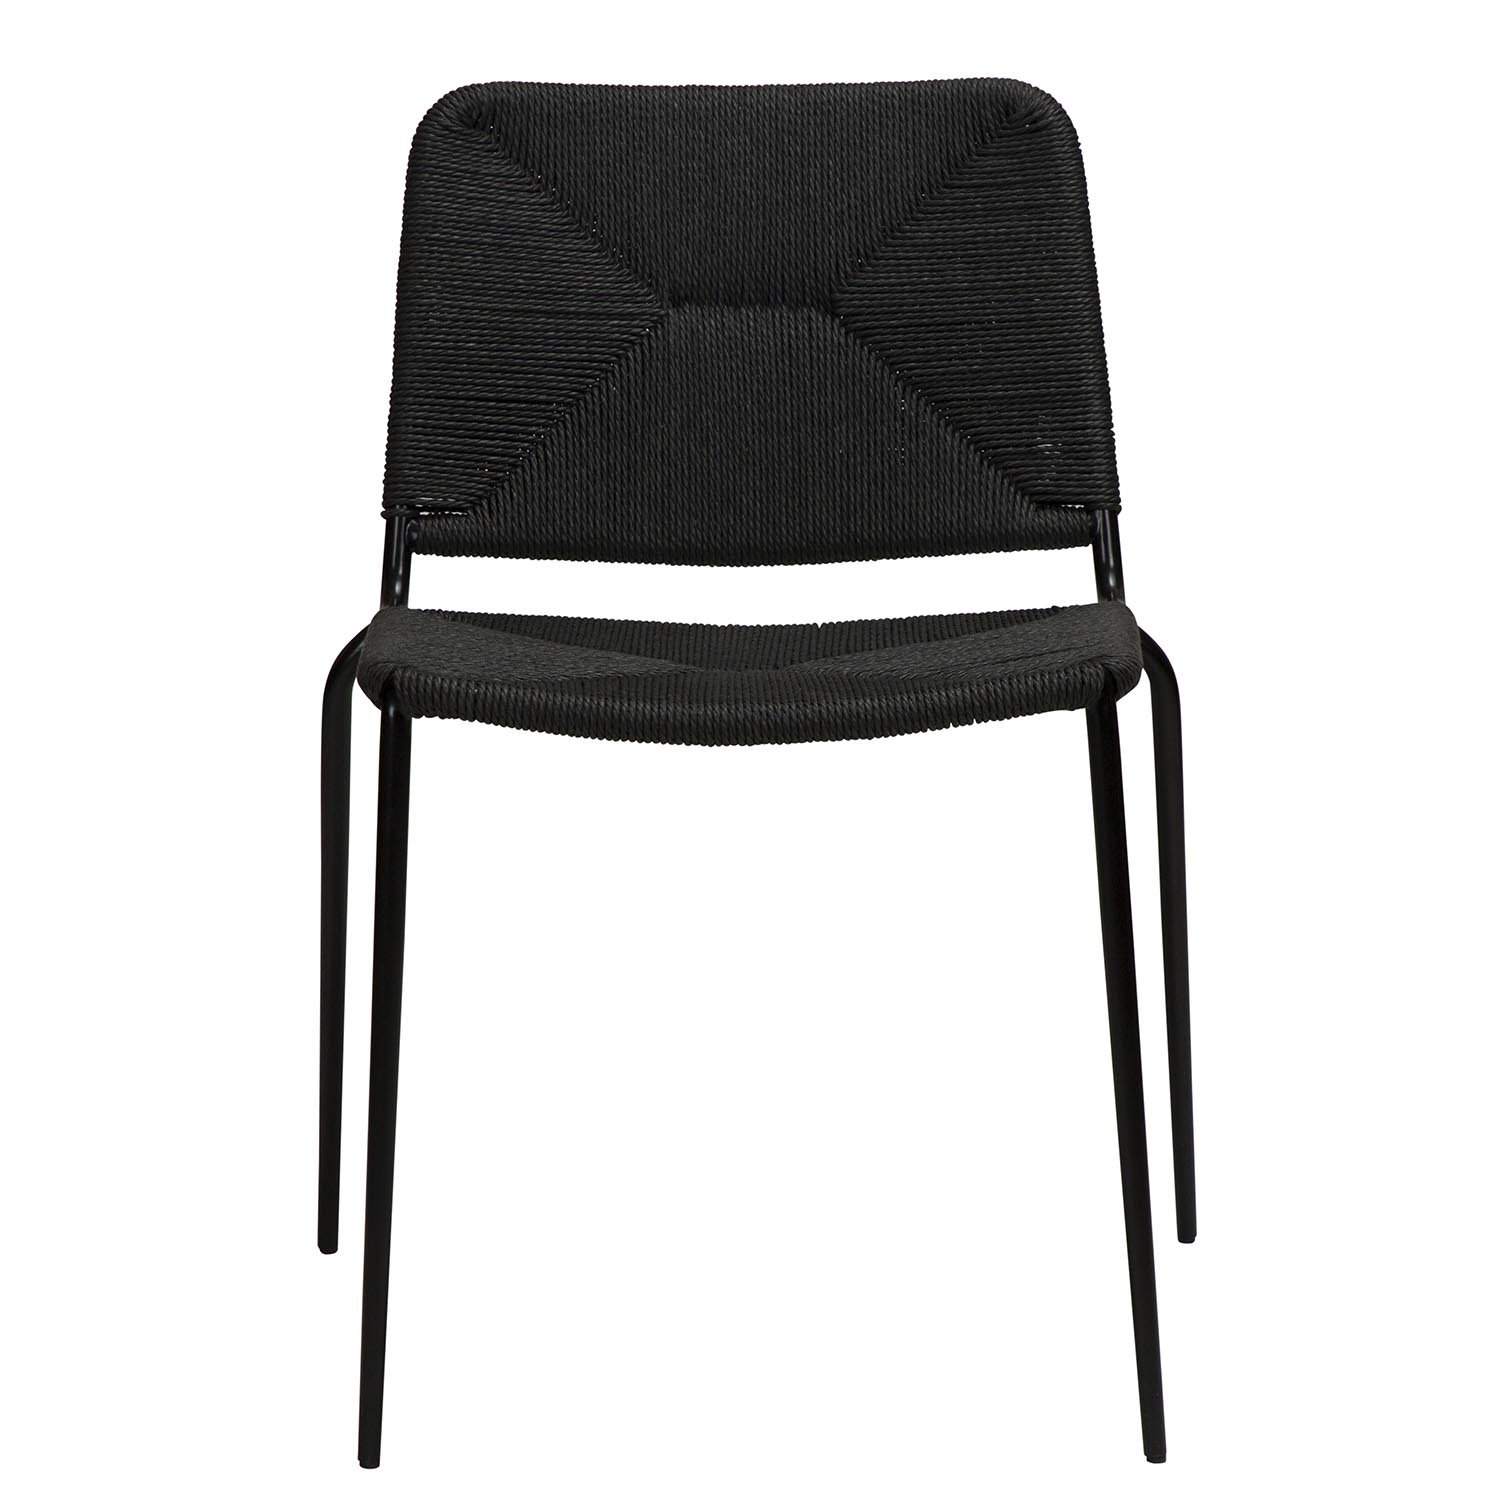 DAN-FORM Stiletto spisebordsstol - sort papir snor og sort stål